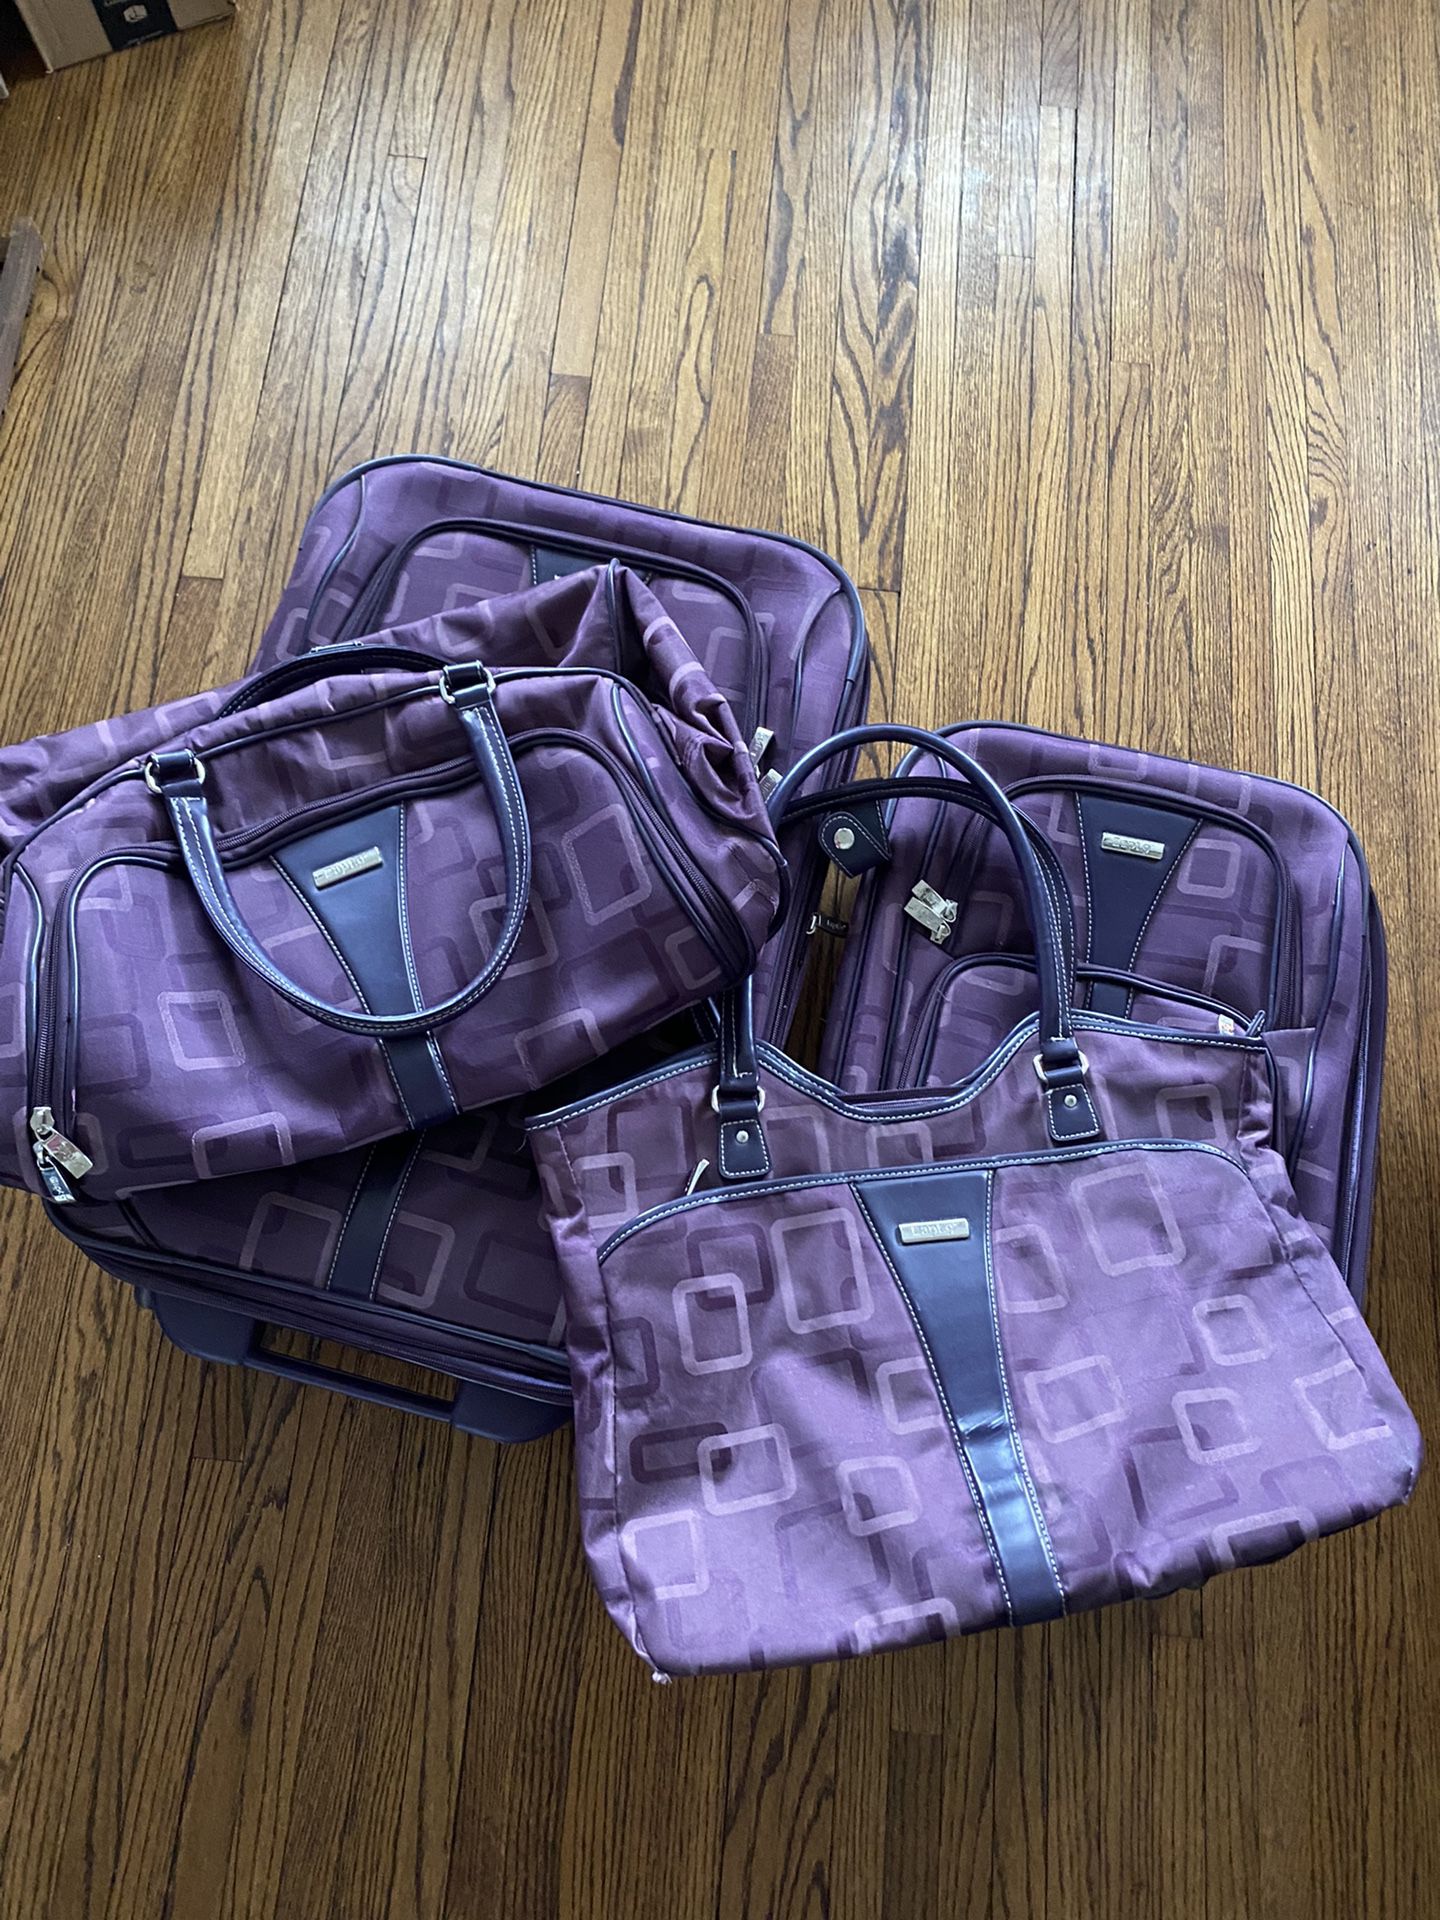 Apt 9. Purple Geometry Luggage Set for Sale in Ottawa, IL - OfferUp